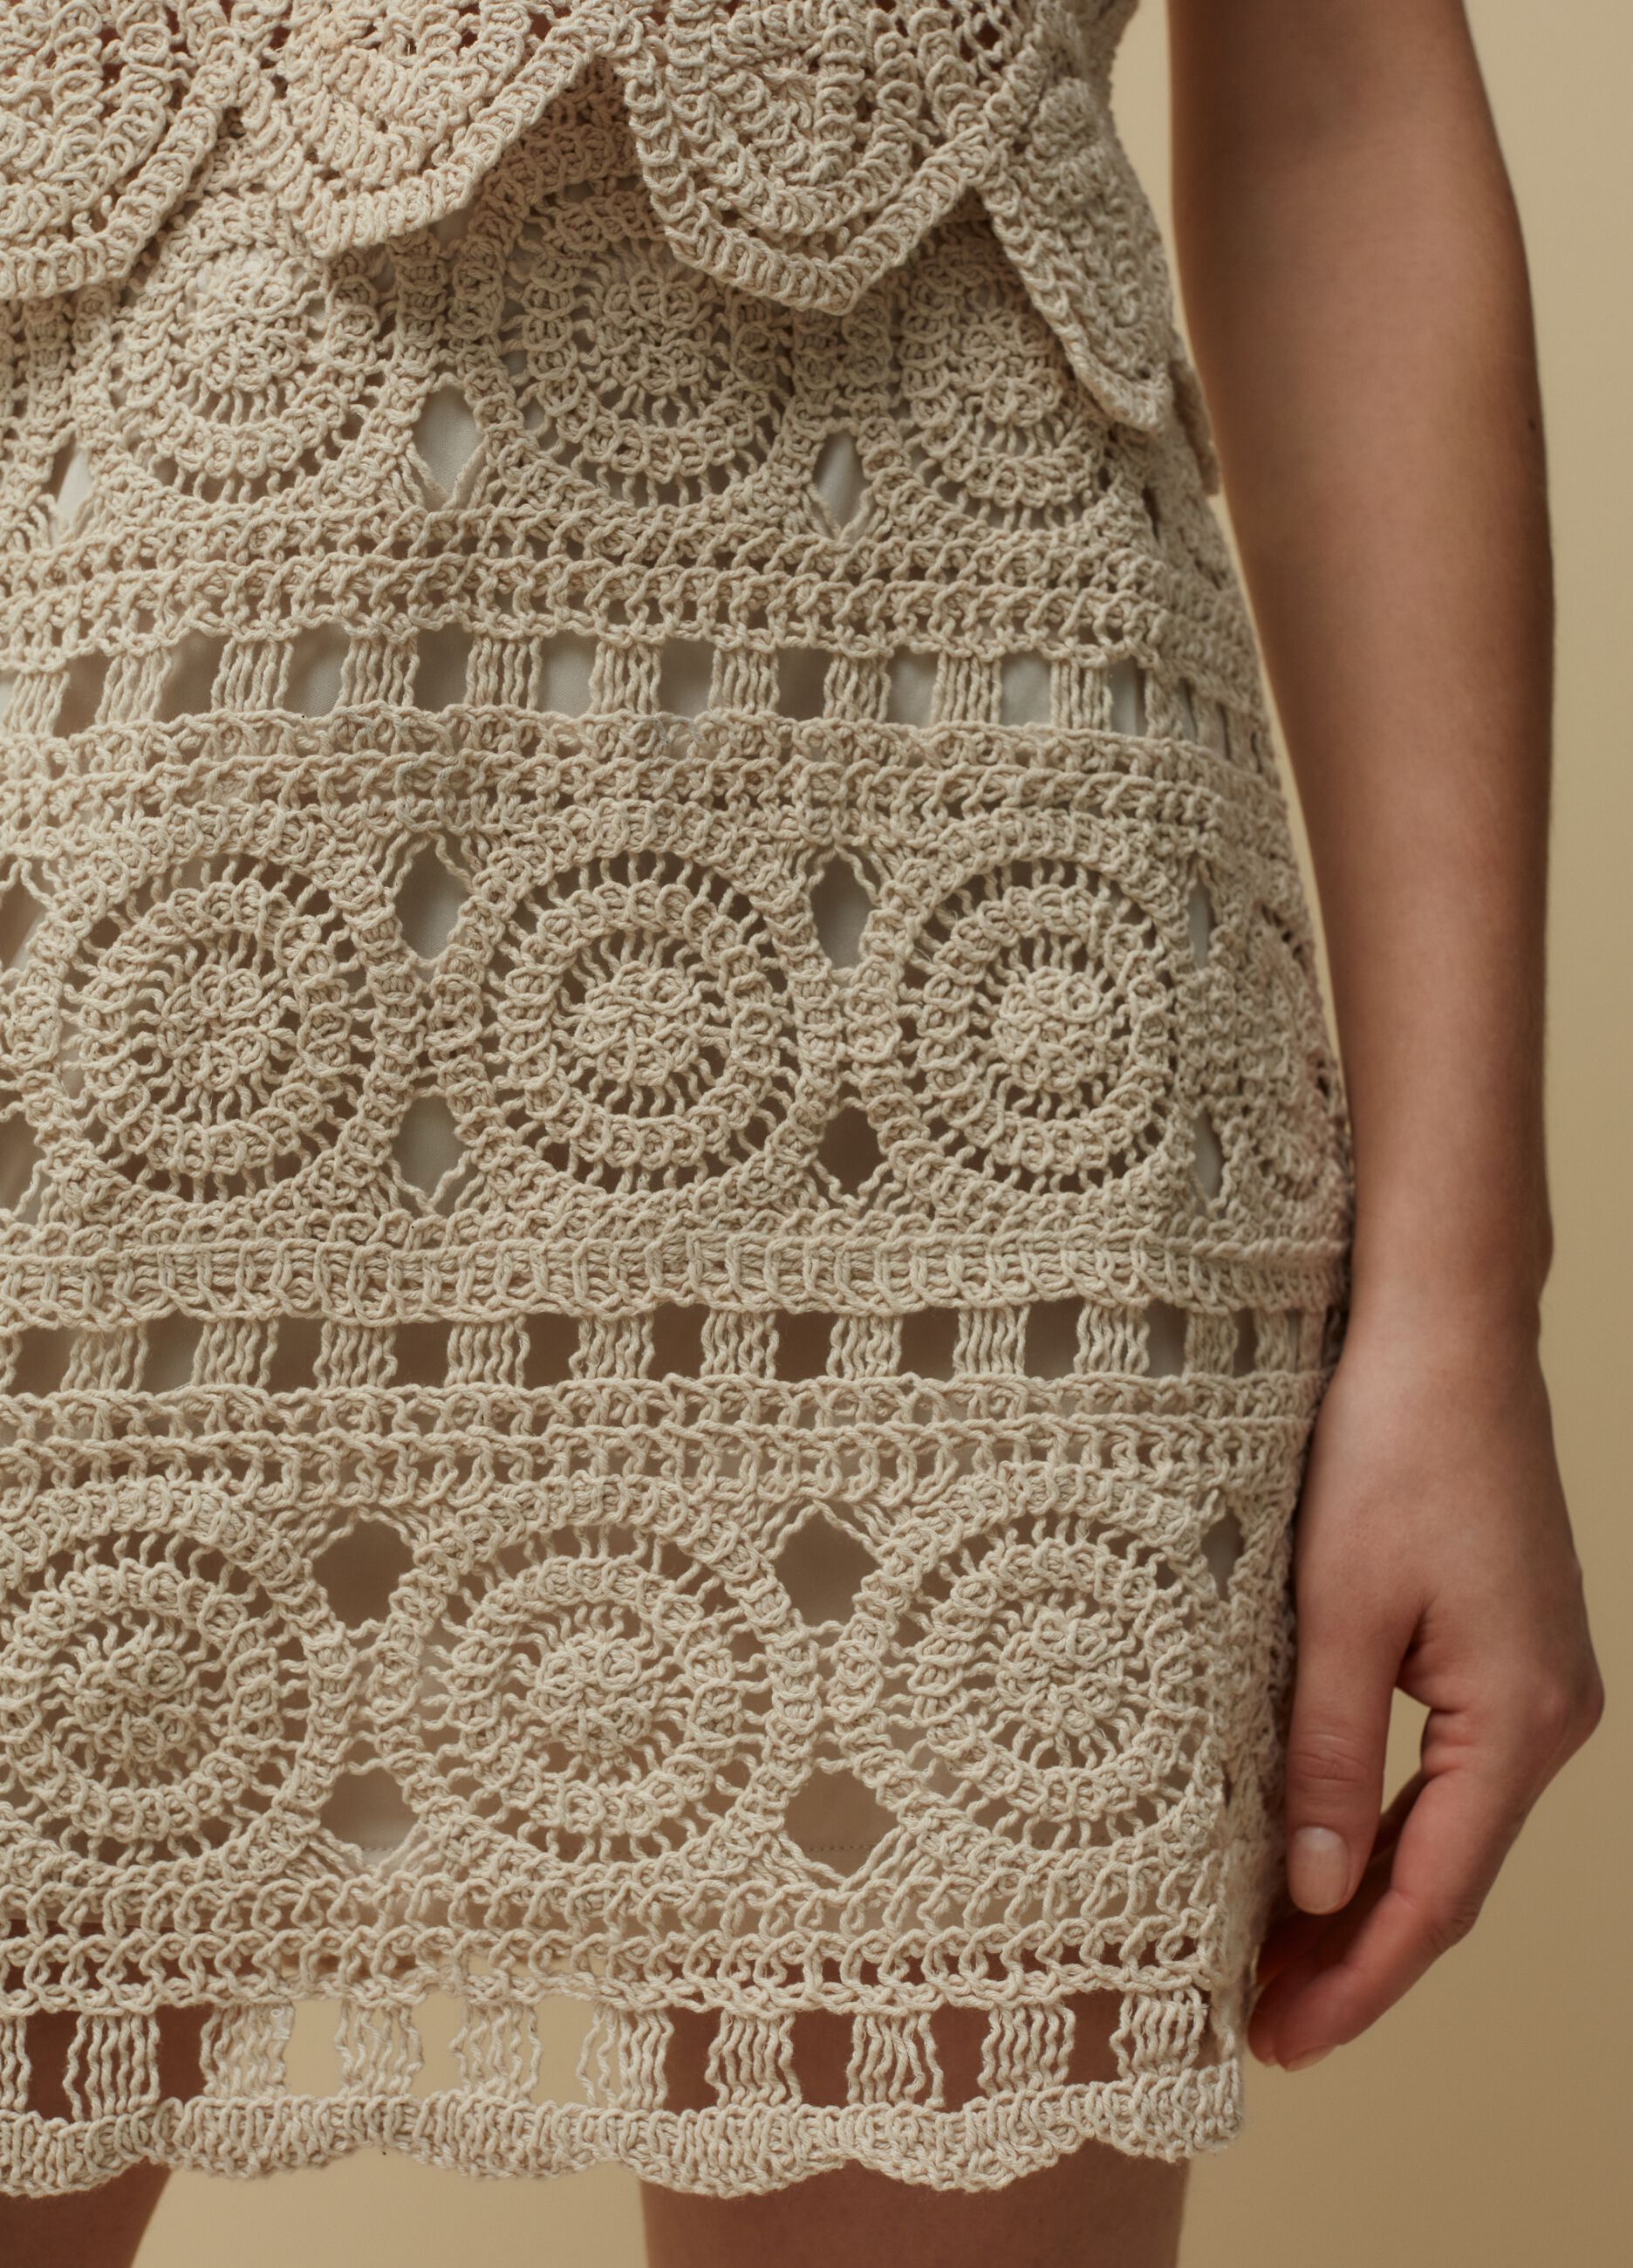 Miniskirt in crochet cotton